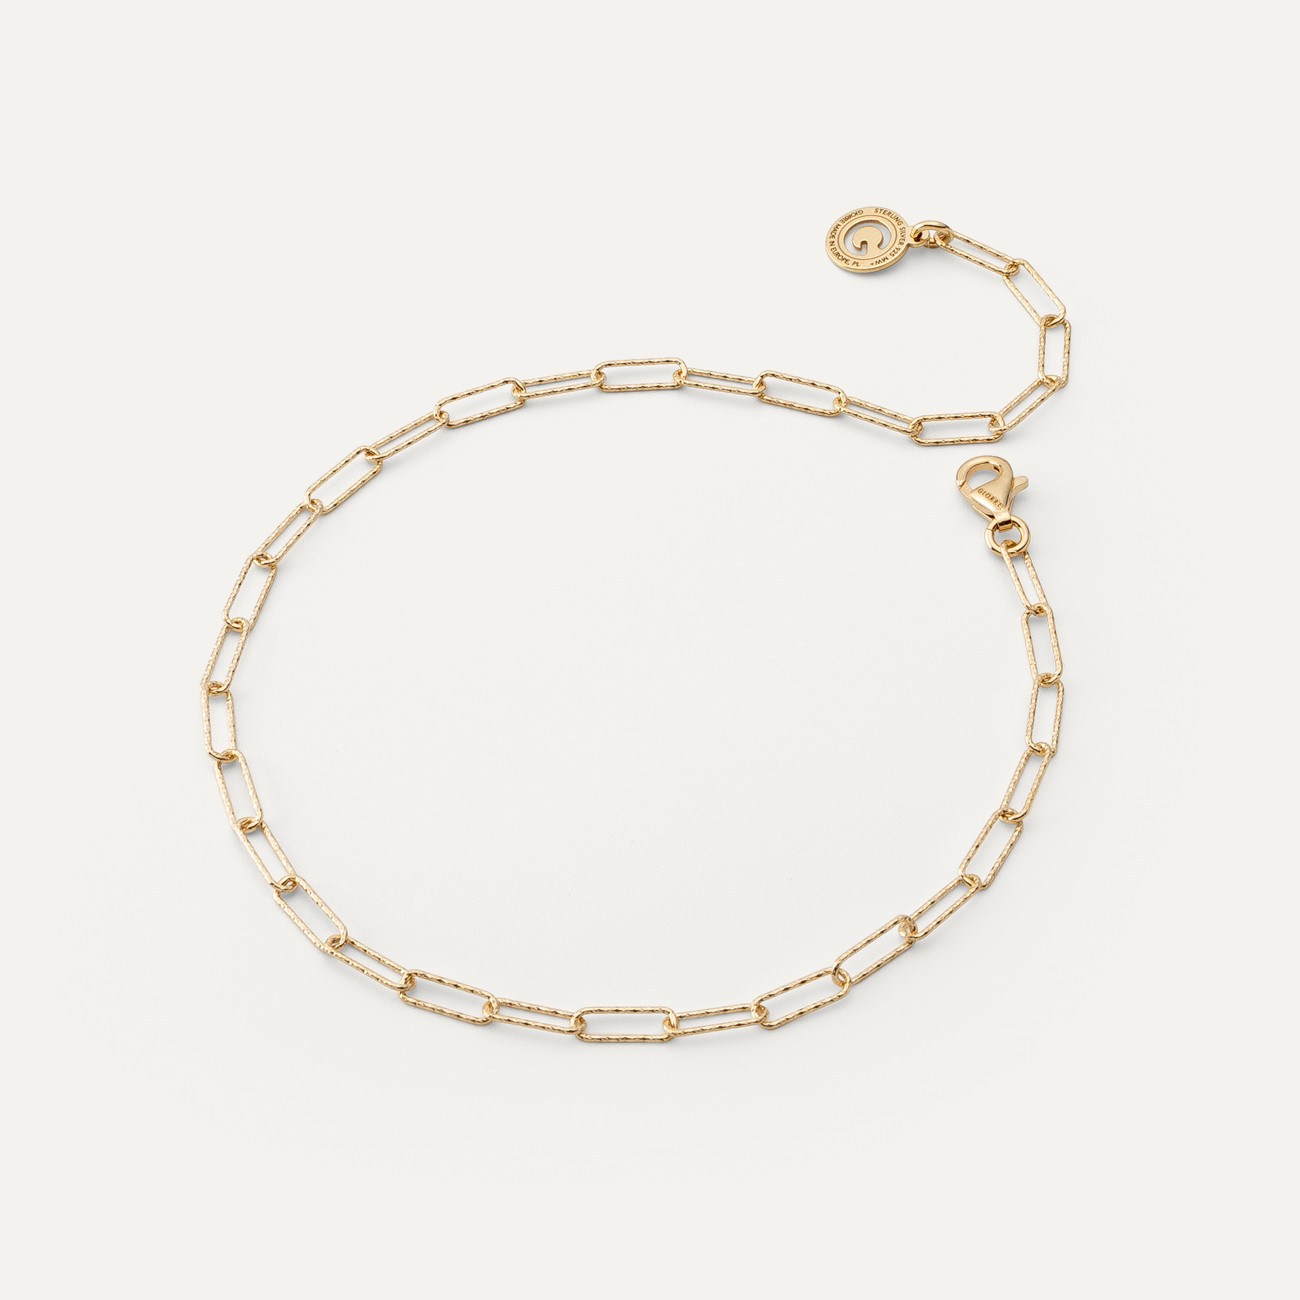 Giorre Woman's Bracelet 38497